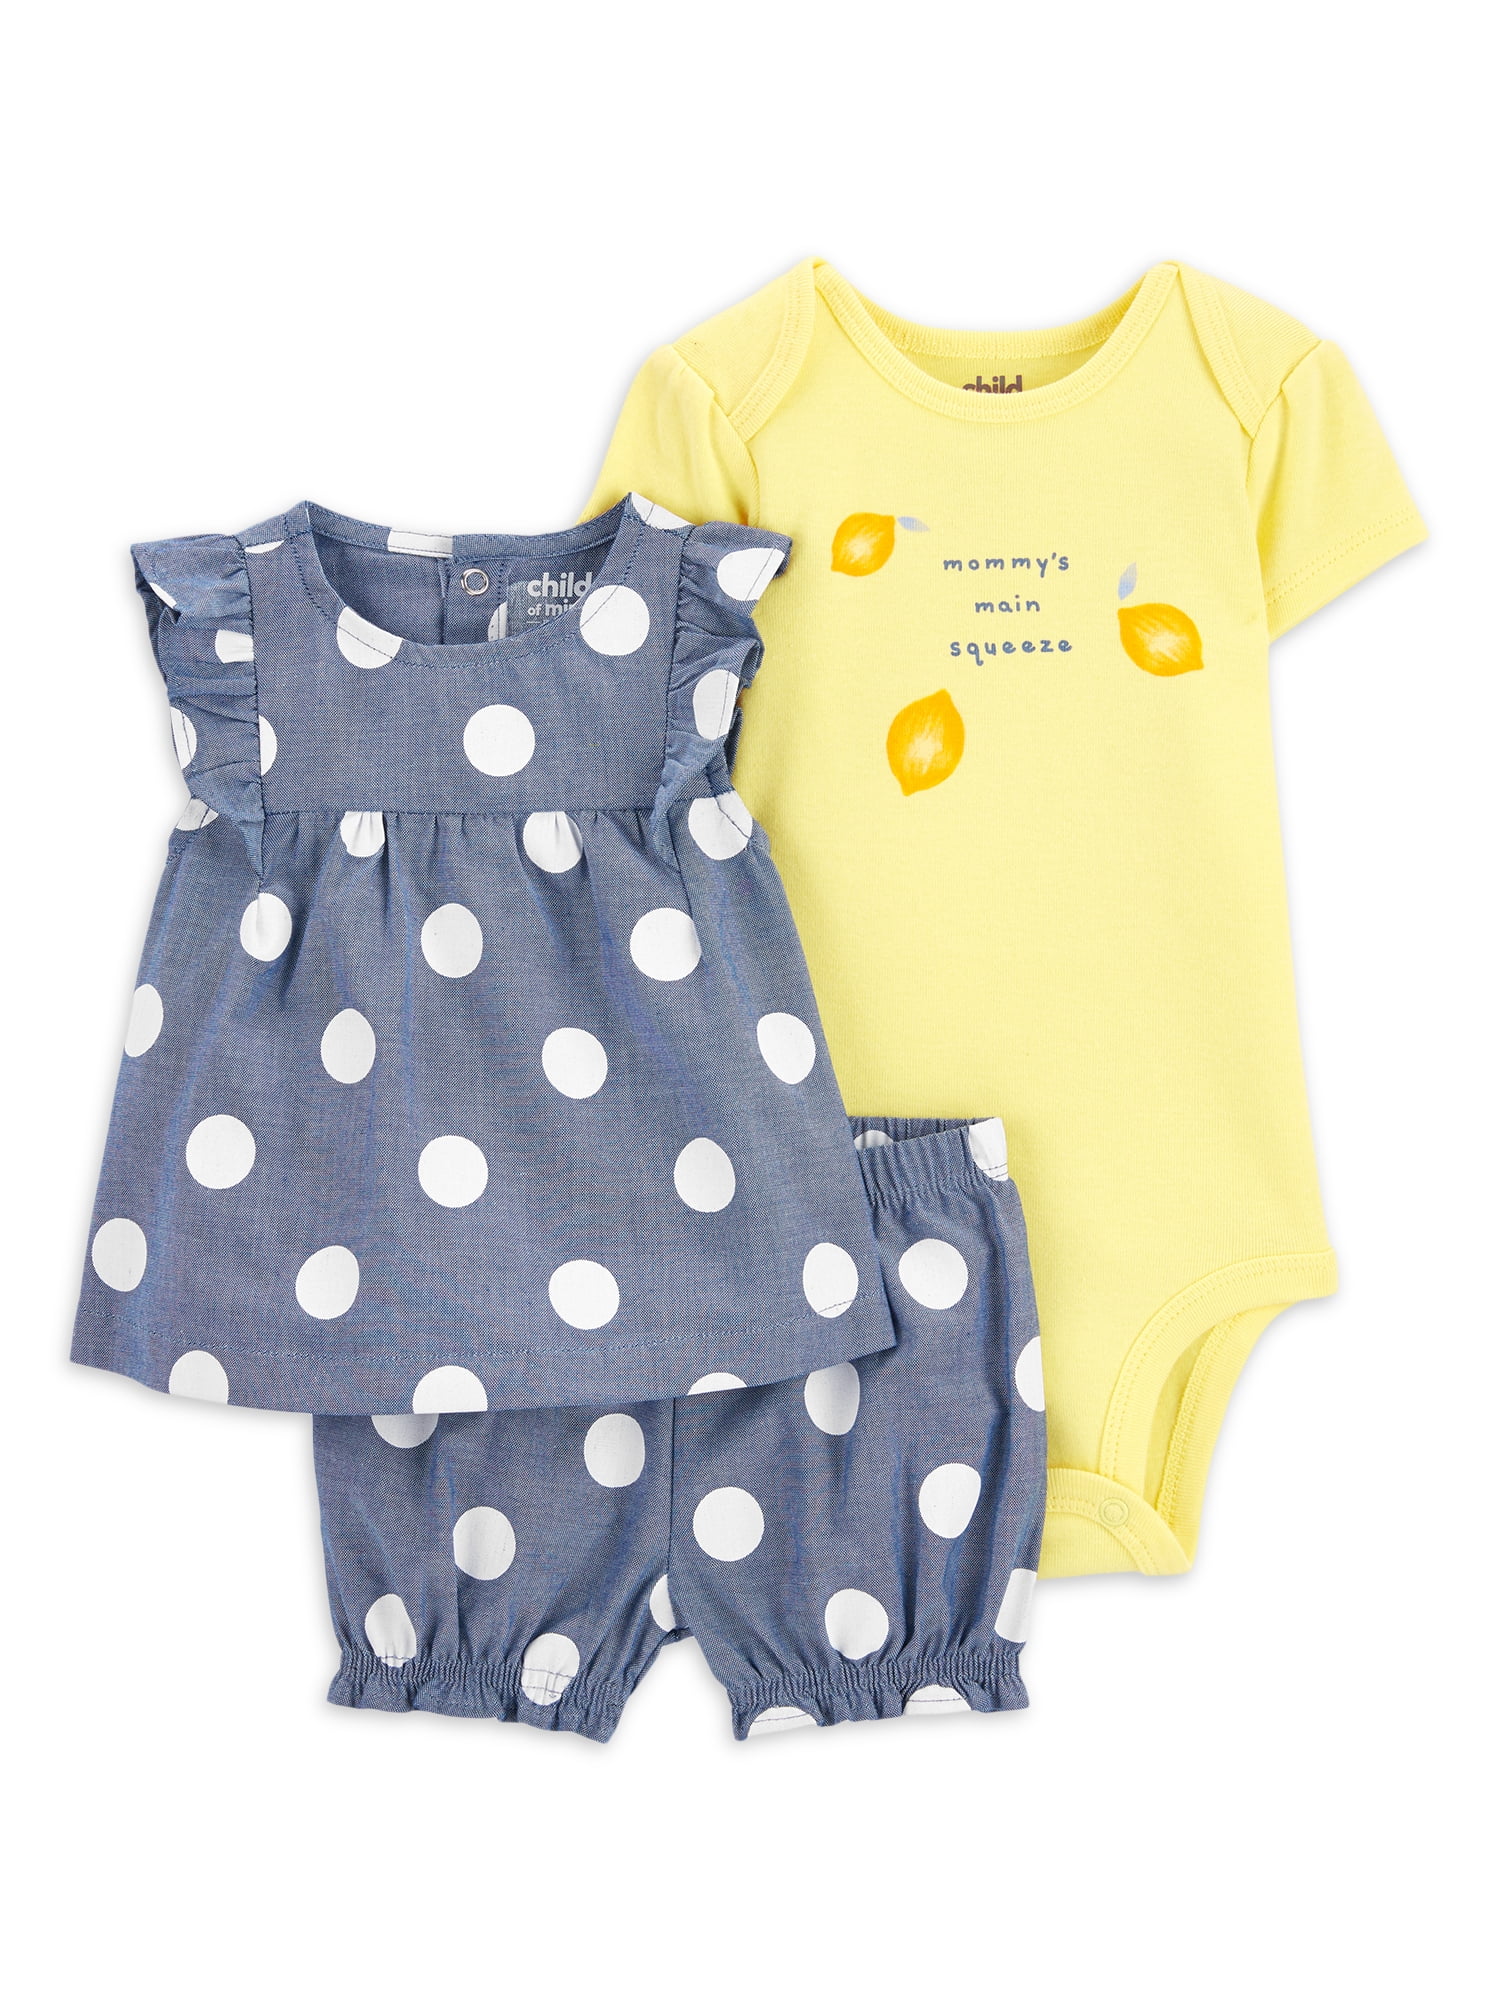 Carter's Child of Mine Baby Girl Outfit Polkadot Short Sleeve Bodysuit, Top  & Short, 3-Piece Set, 0/3 Months - 24 Months - Walmart.com